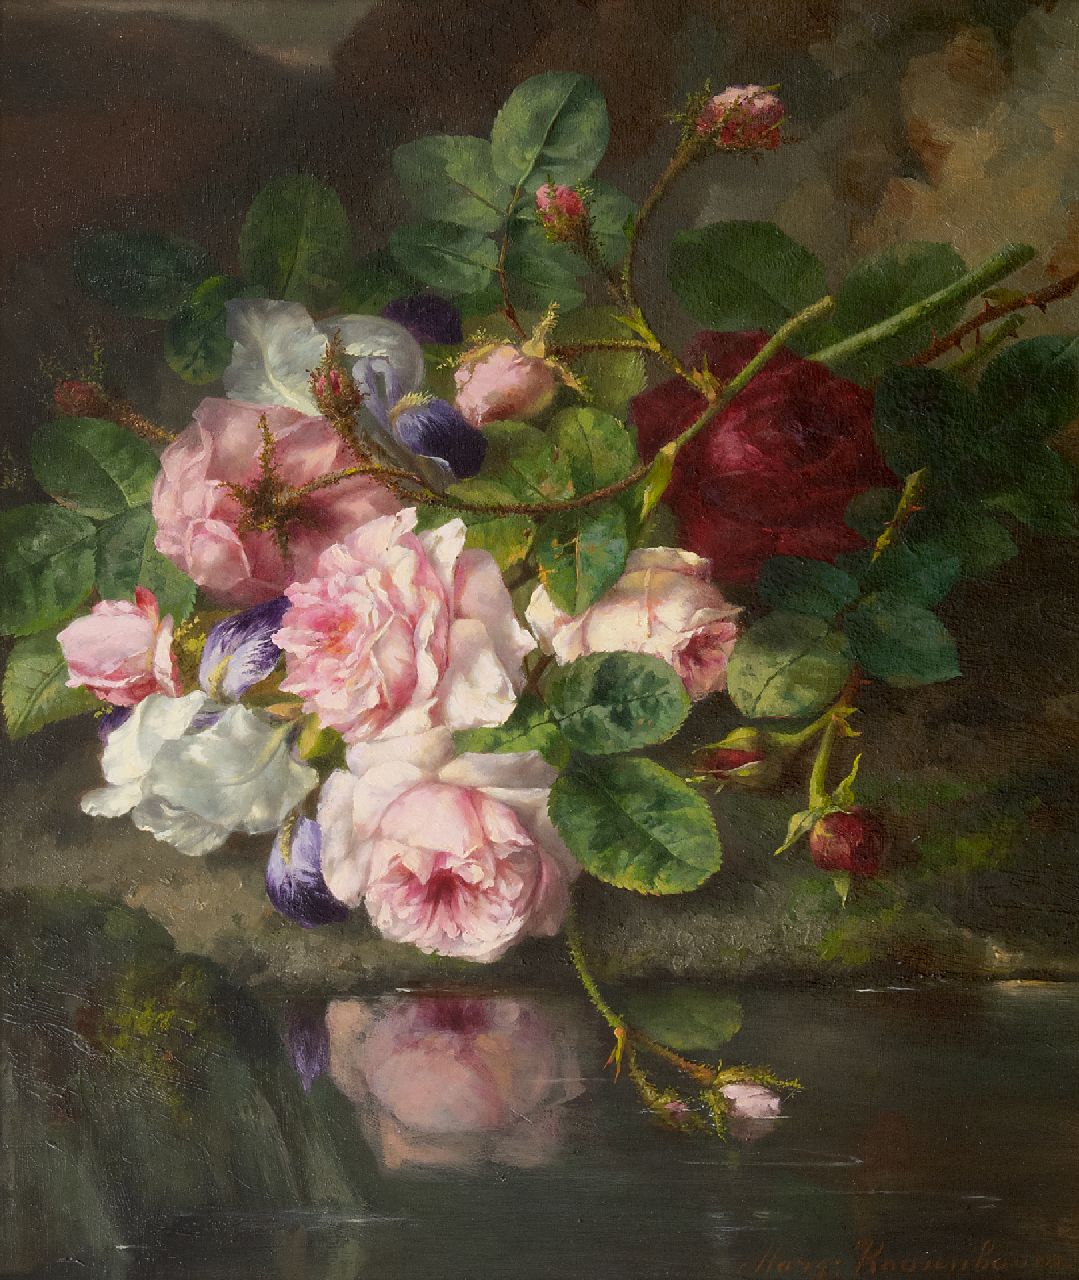 Roosenboom M.C.J.W.H.  | 'Margaretha' Cornelia Johanna Wilhelmina Henriëtta Roosenboom, Roses on a forest floor, oil on panel 45.4 x 37.3 cm, signed l.r.